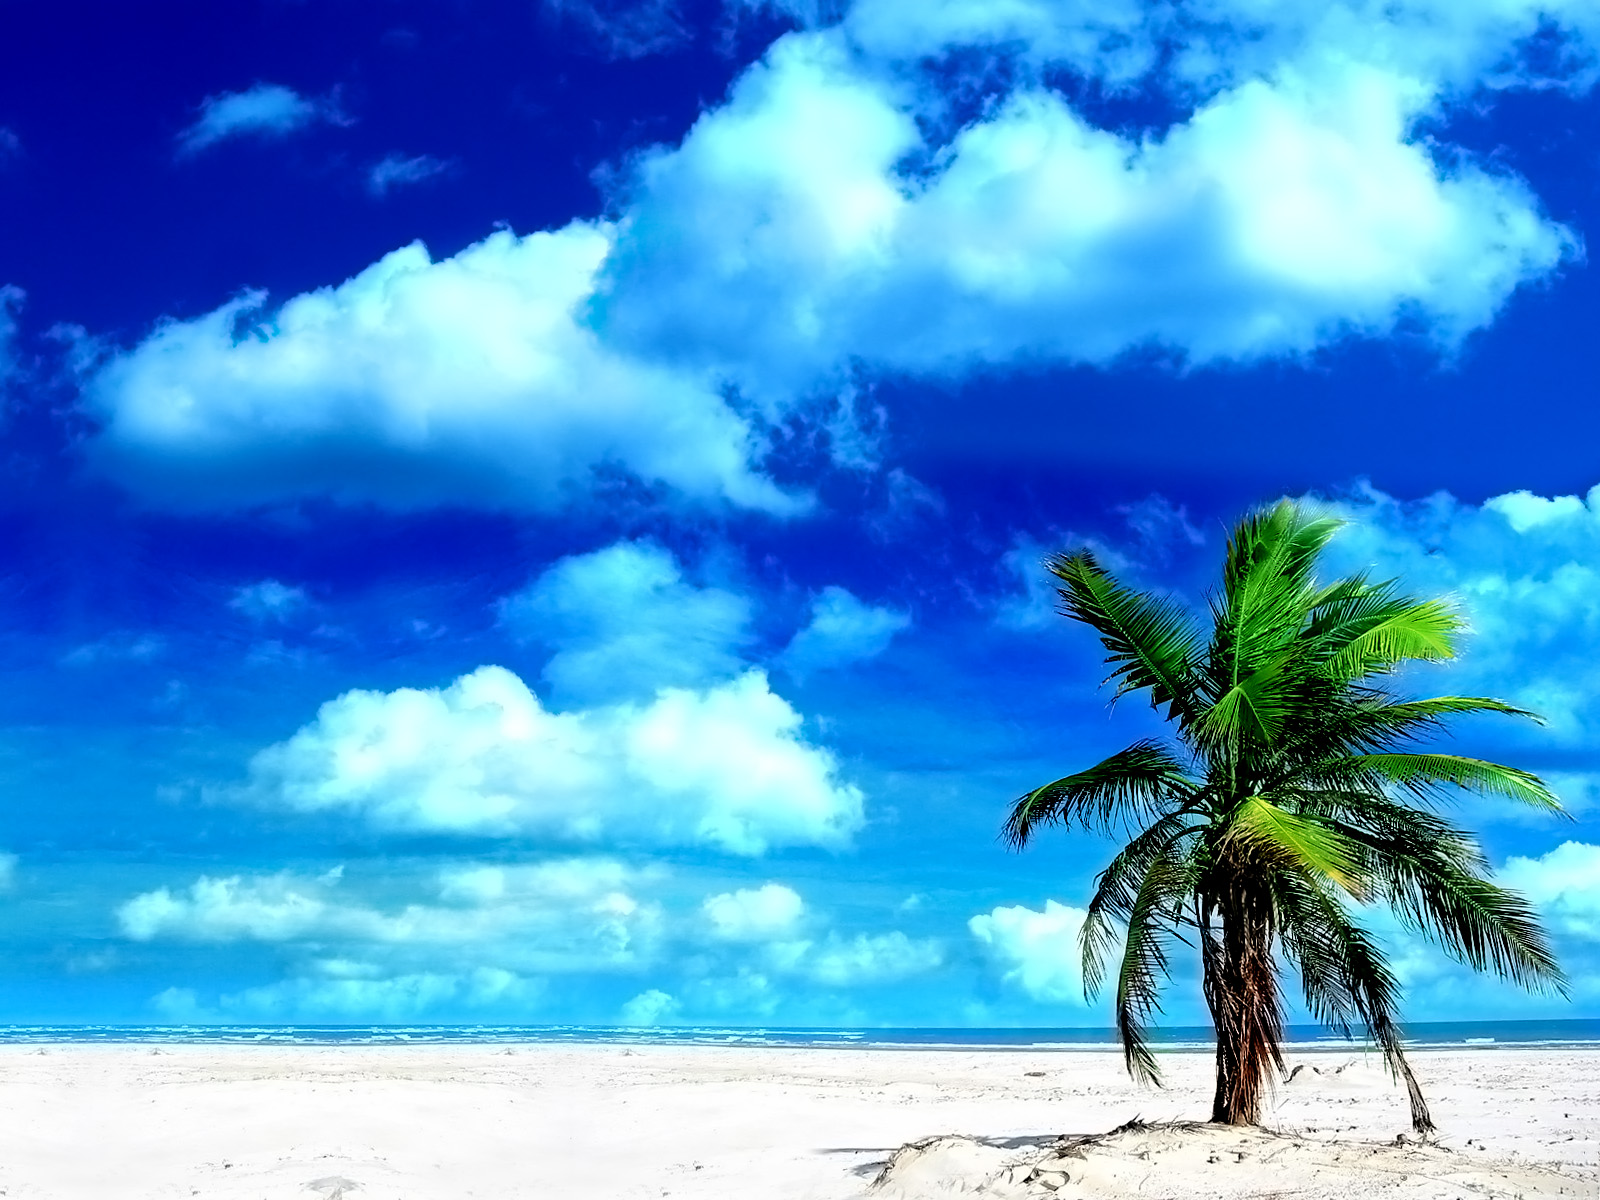 https://blogger.googleusercontent.com/img/b/R29vZ2xl/AVvXsEiD8uo0svWnM07ccB9a7QMfFwu7zjbvBkfffAJDIUIb017tJBUhAksJHjX9lq68vMw7BrmgKQkbvHnhLeomhIeiA3qJ34tgQFYlwICaDxIlMhkV7a1YK1_bKG0vY0WBXW7CRYtXw4xk1P7M/s1600/holiday-beach-summer-6557.jpg